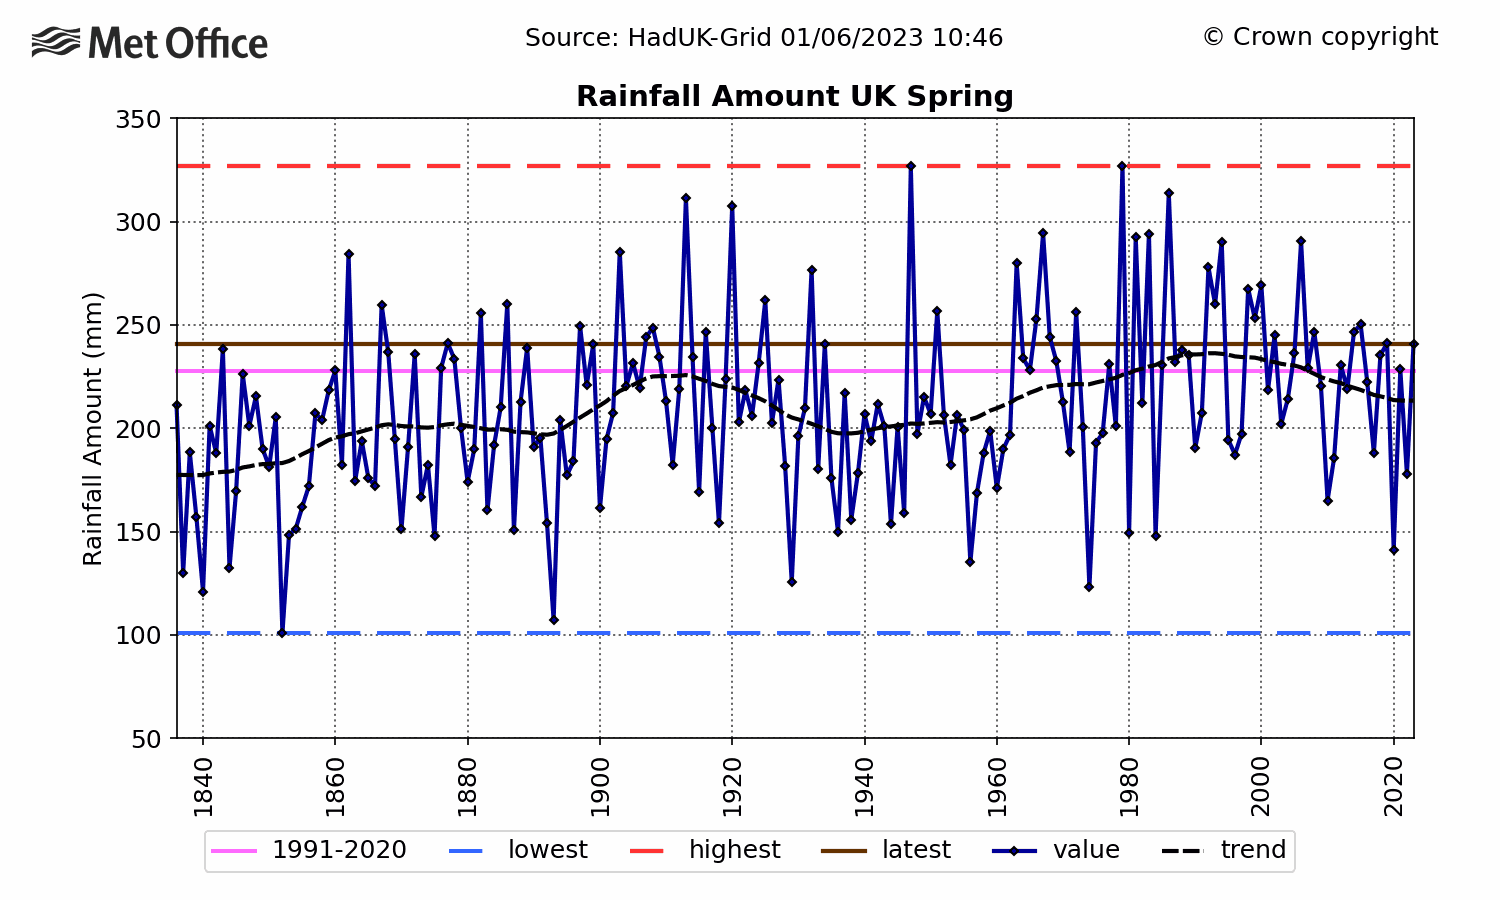 UK Rainfall - Spring